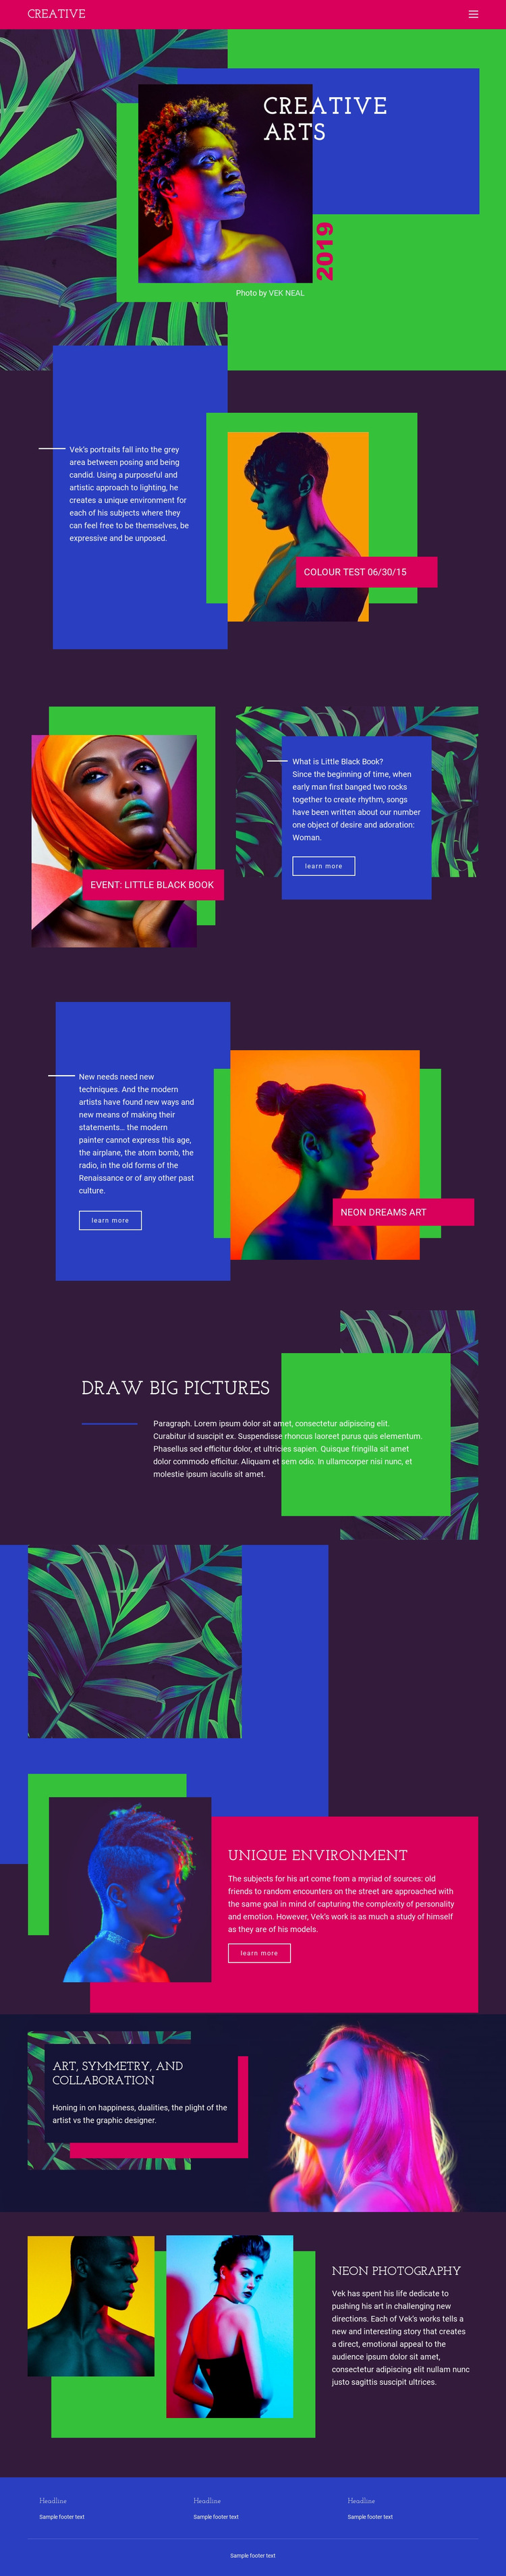 Creative Art Ideas HTML5 Template